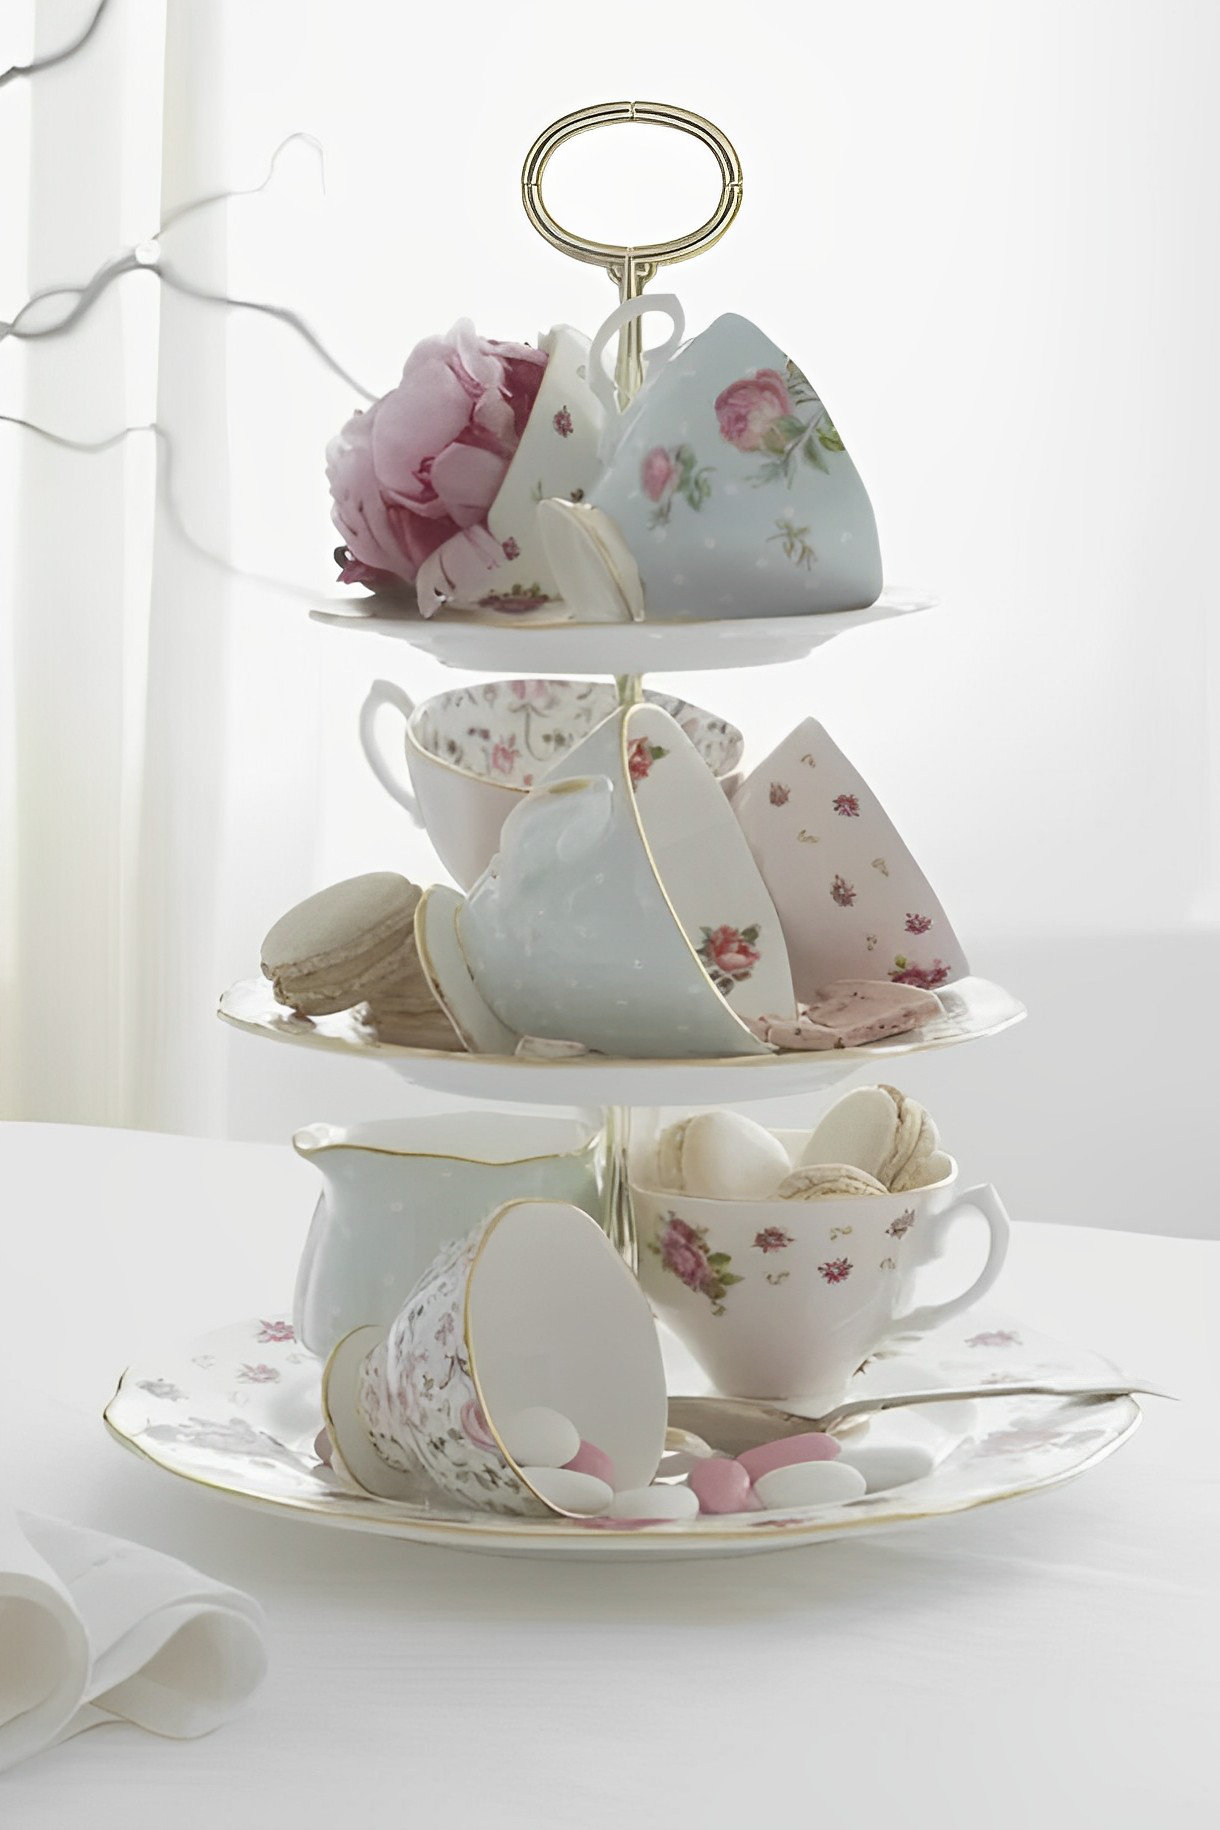 Royal Albert 100 Years of Royal Albert Teacups and Saucers, 1900-1940, Set  of 5